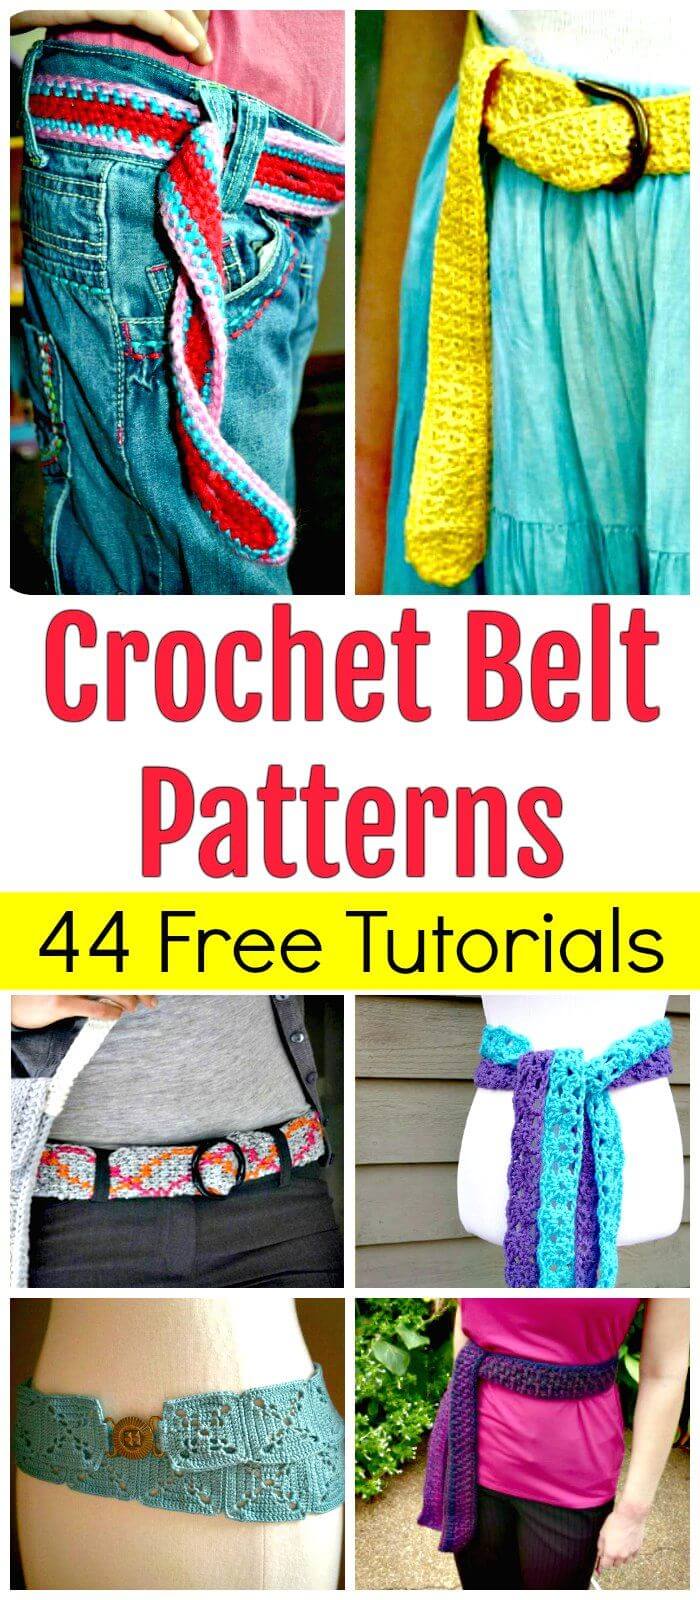 Crochet-Belt-Patterns-–-44-Free-Tutorials-DIY-Crafts-Free-Crochet-Patterns